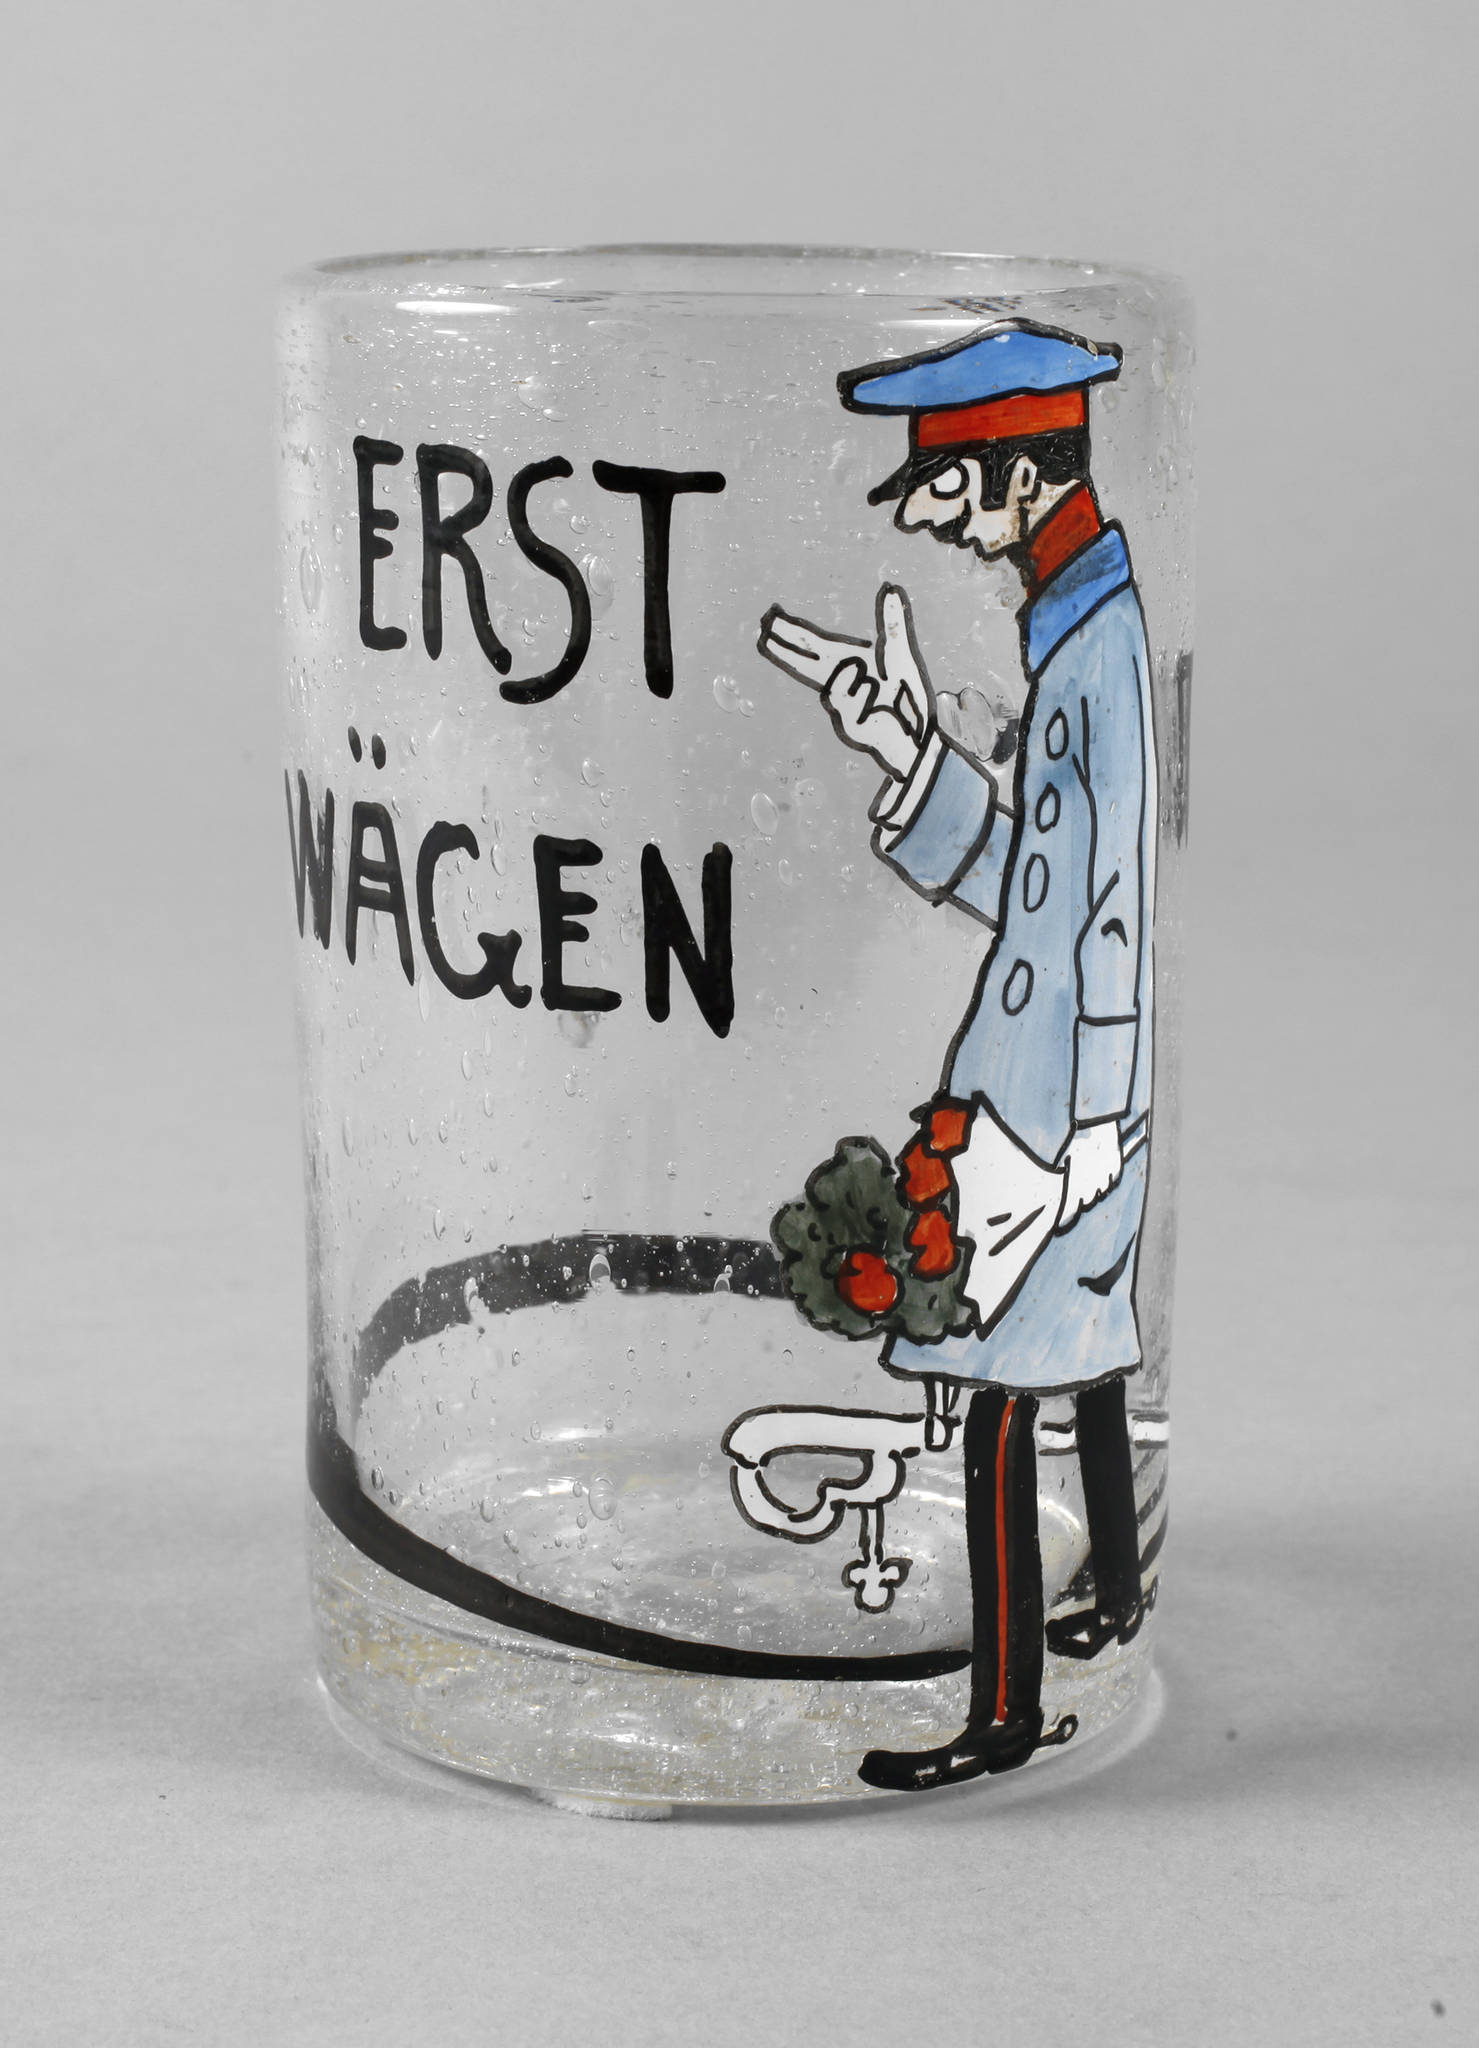 Ludwig Hohlwein Trinkglas ” Erst wägen dann-”